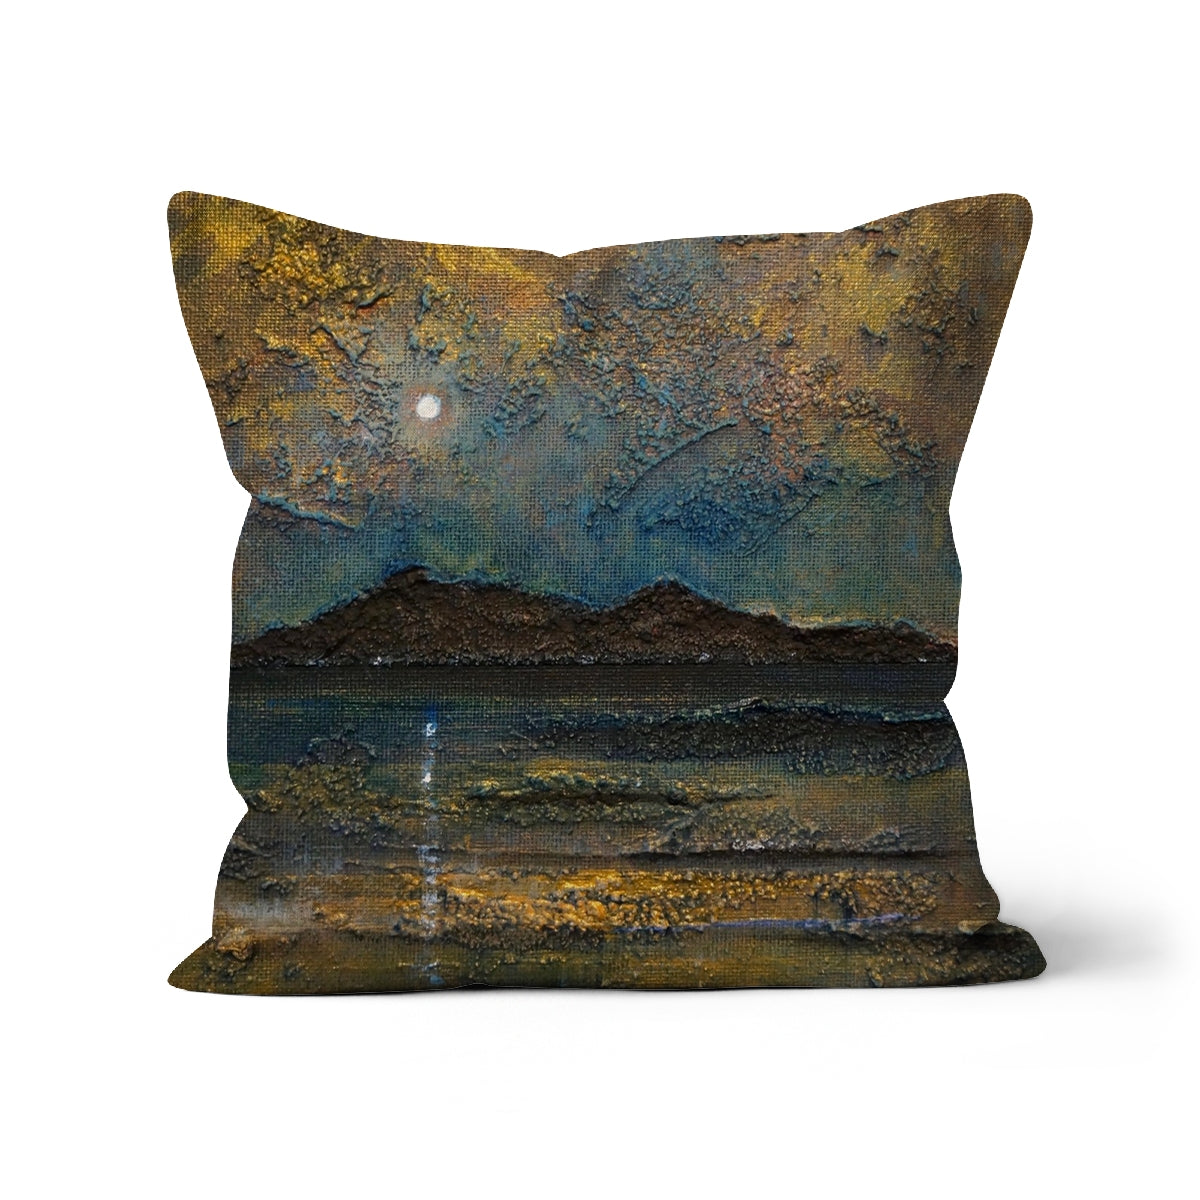 Arran Moonlight Art Gifts Cushion-Cushions-Arran Art Gallery-Linen-22"x22"-Paintings, Prints, Homeware, Art Gifts From Scotland By Scottish Artist Kevin Hunter